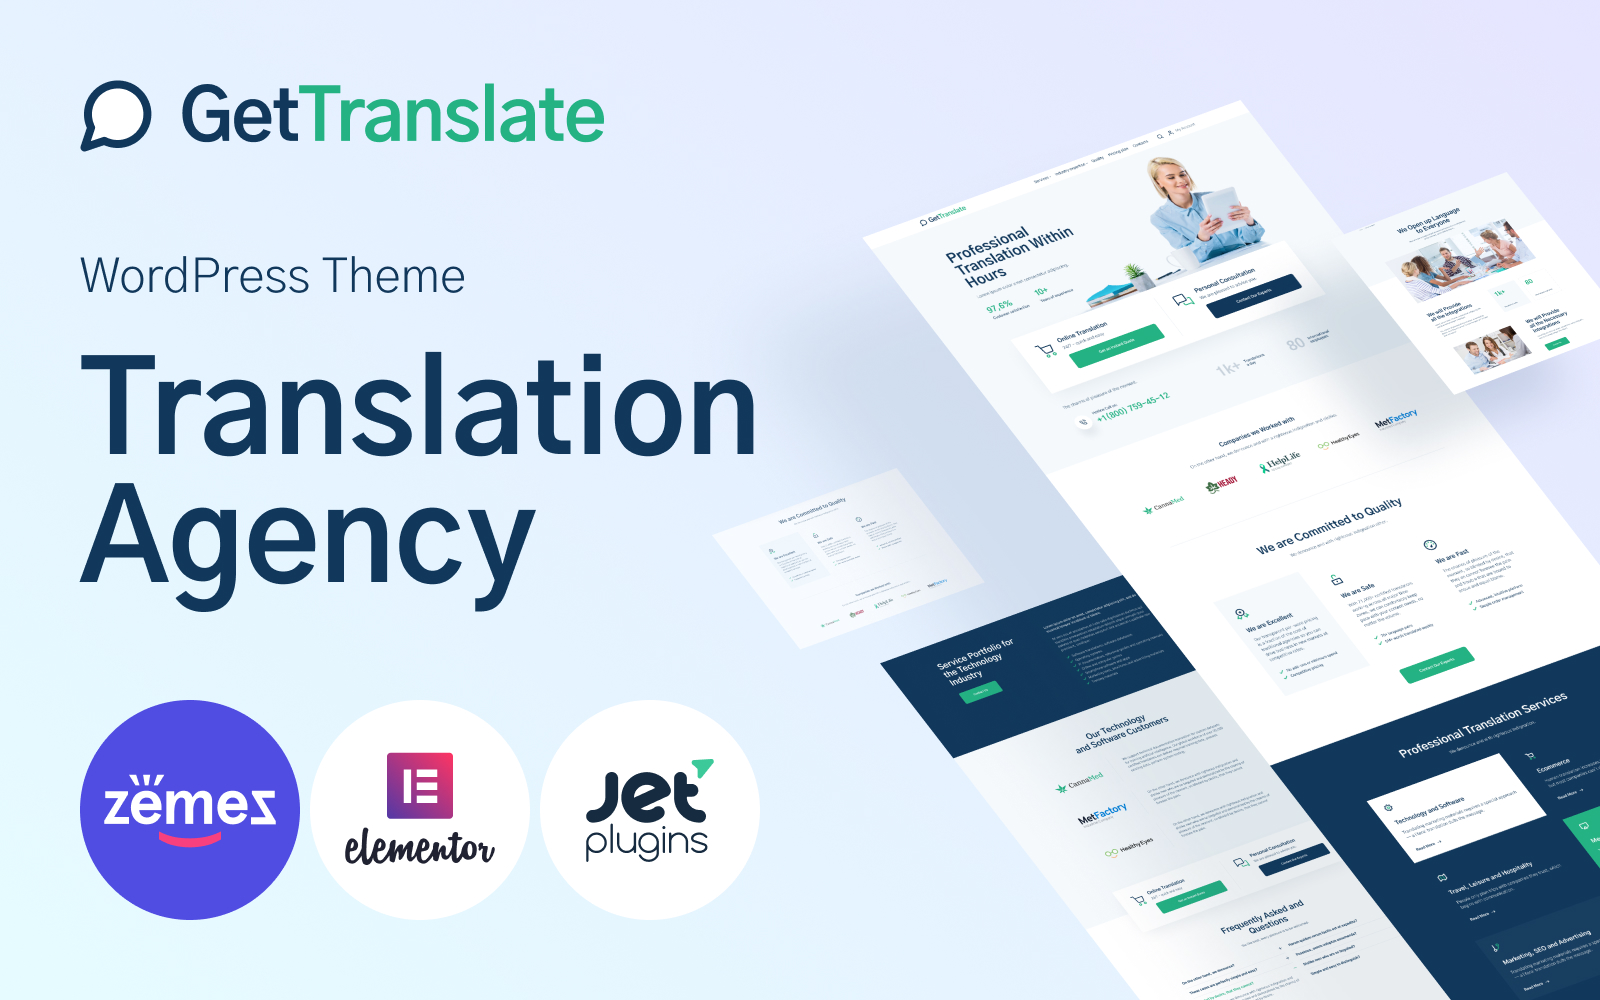 GetTranslate - Translation Agency WordPress Theme